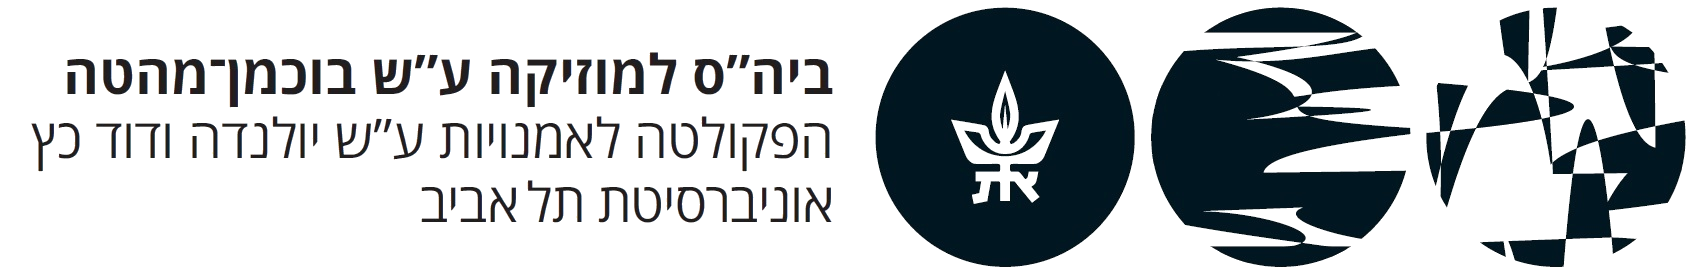 logo ביה״ס למוסיקה - אוניברסיטת תל אביב